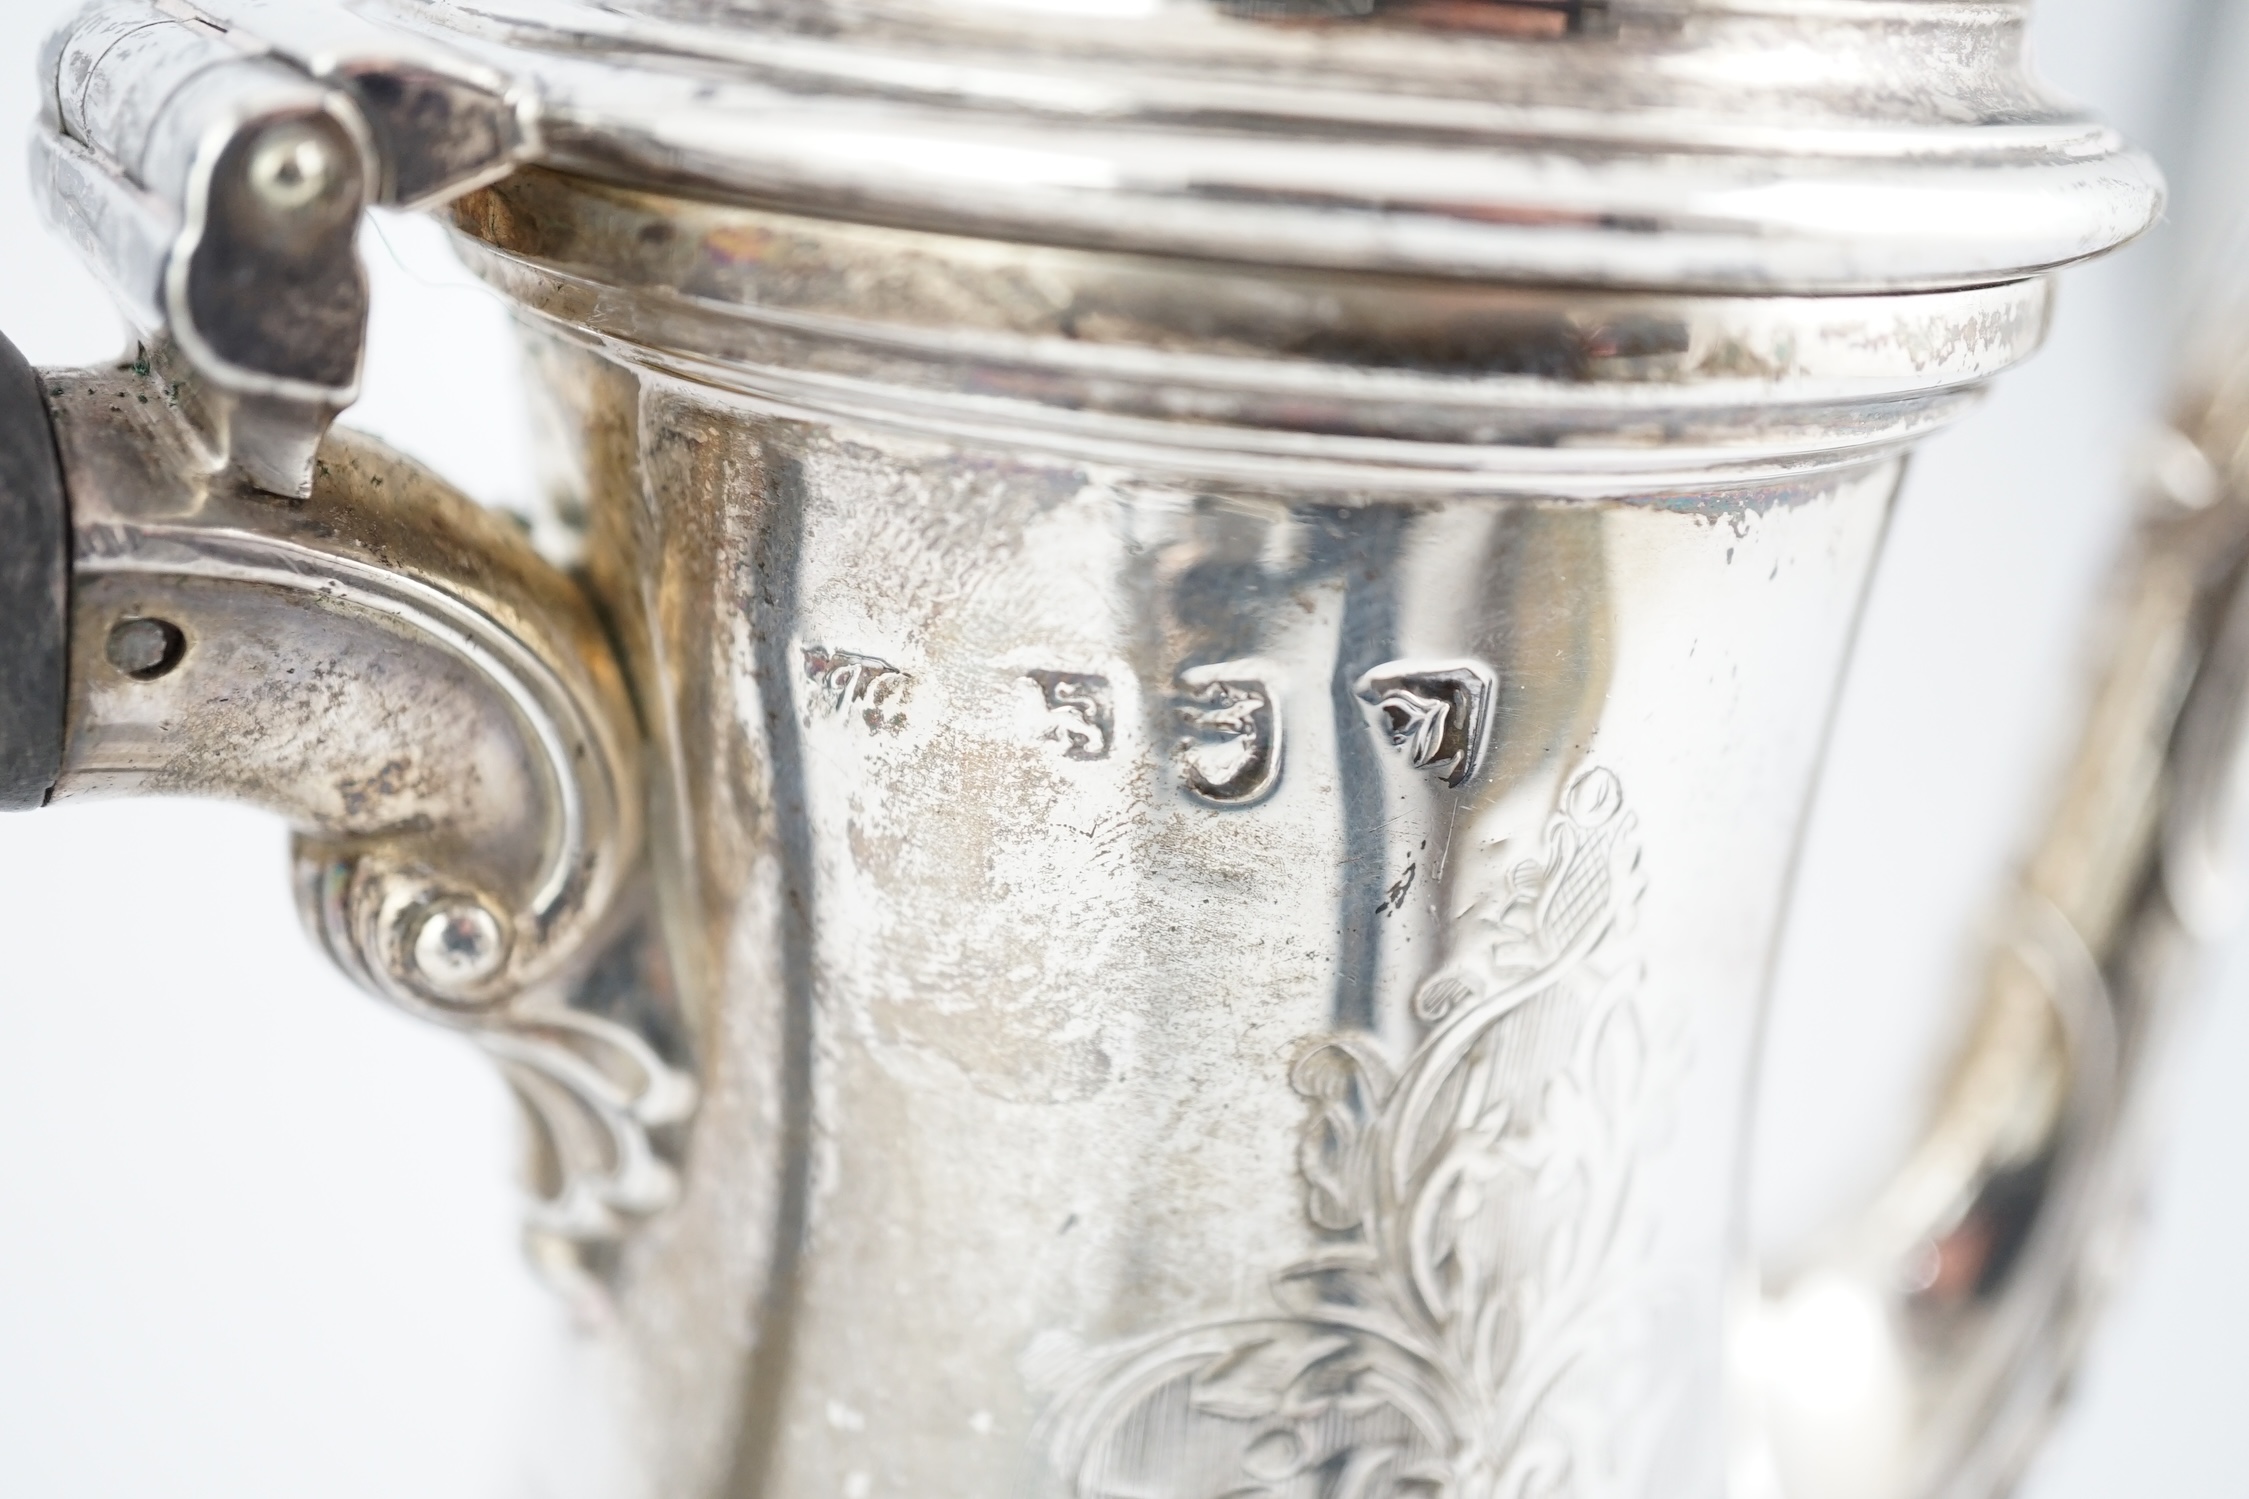 A George III silver coffee pot, by John Payne?